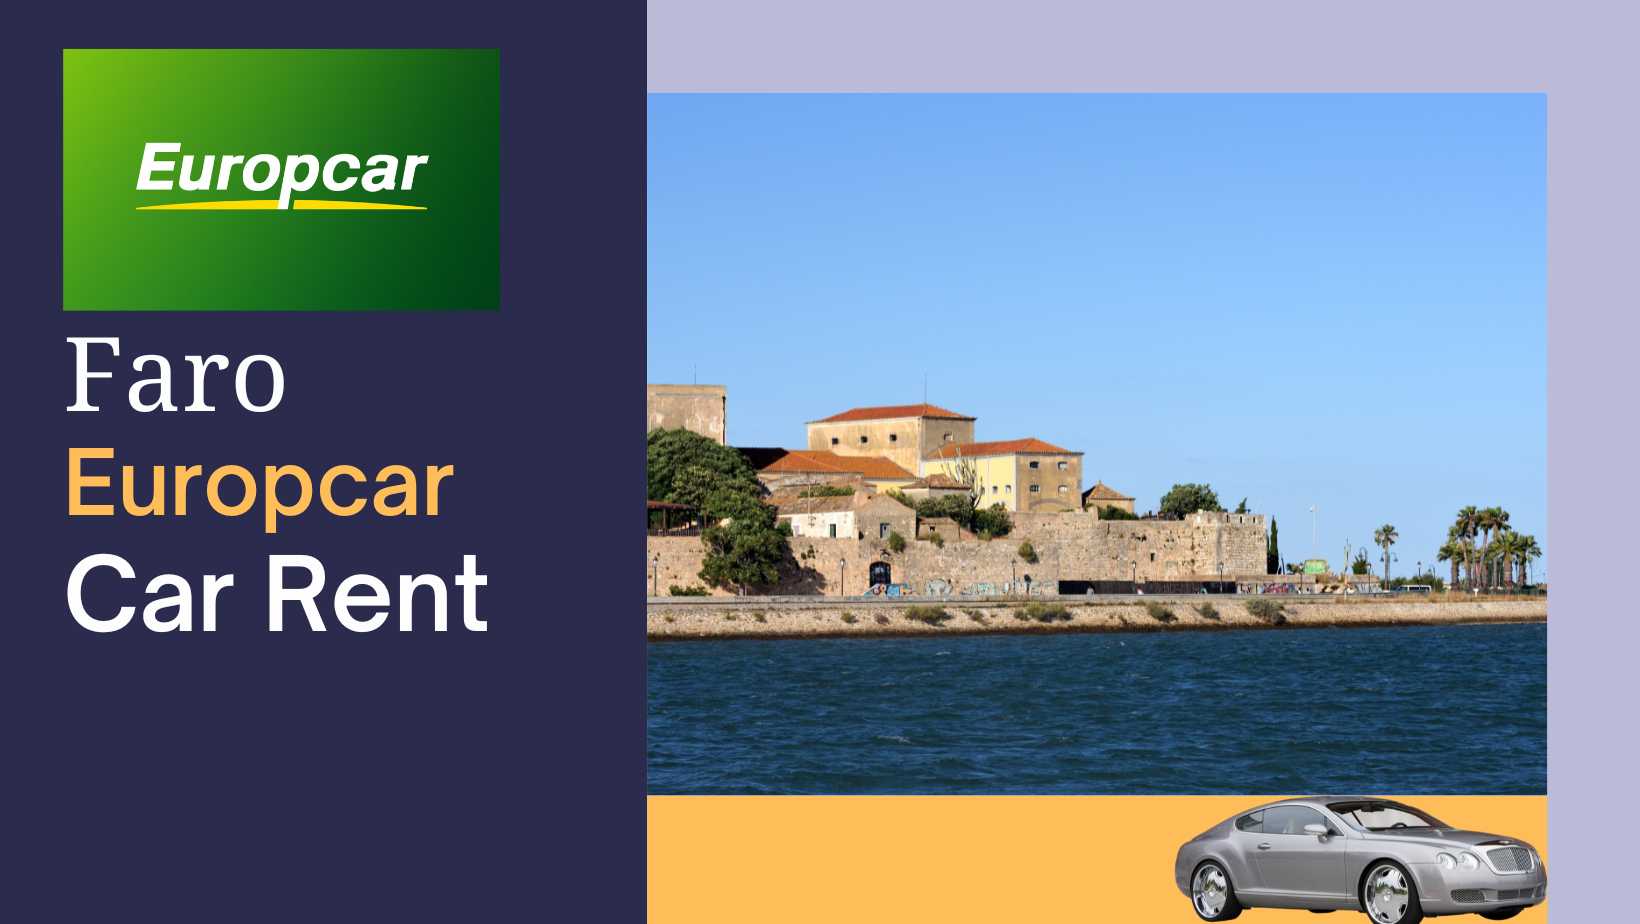 Europcar Faro